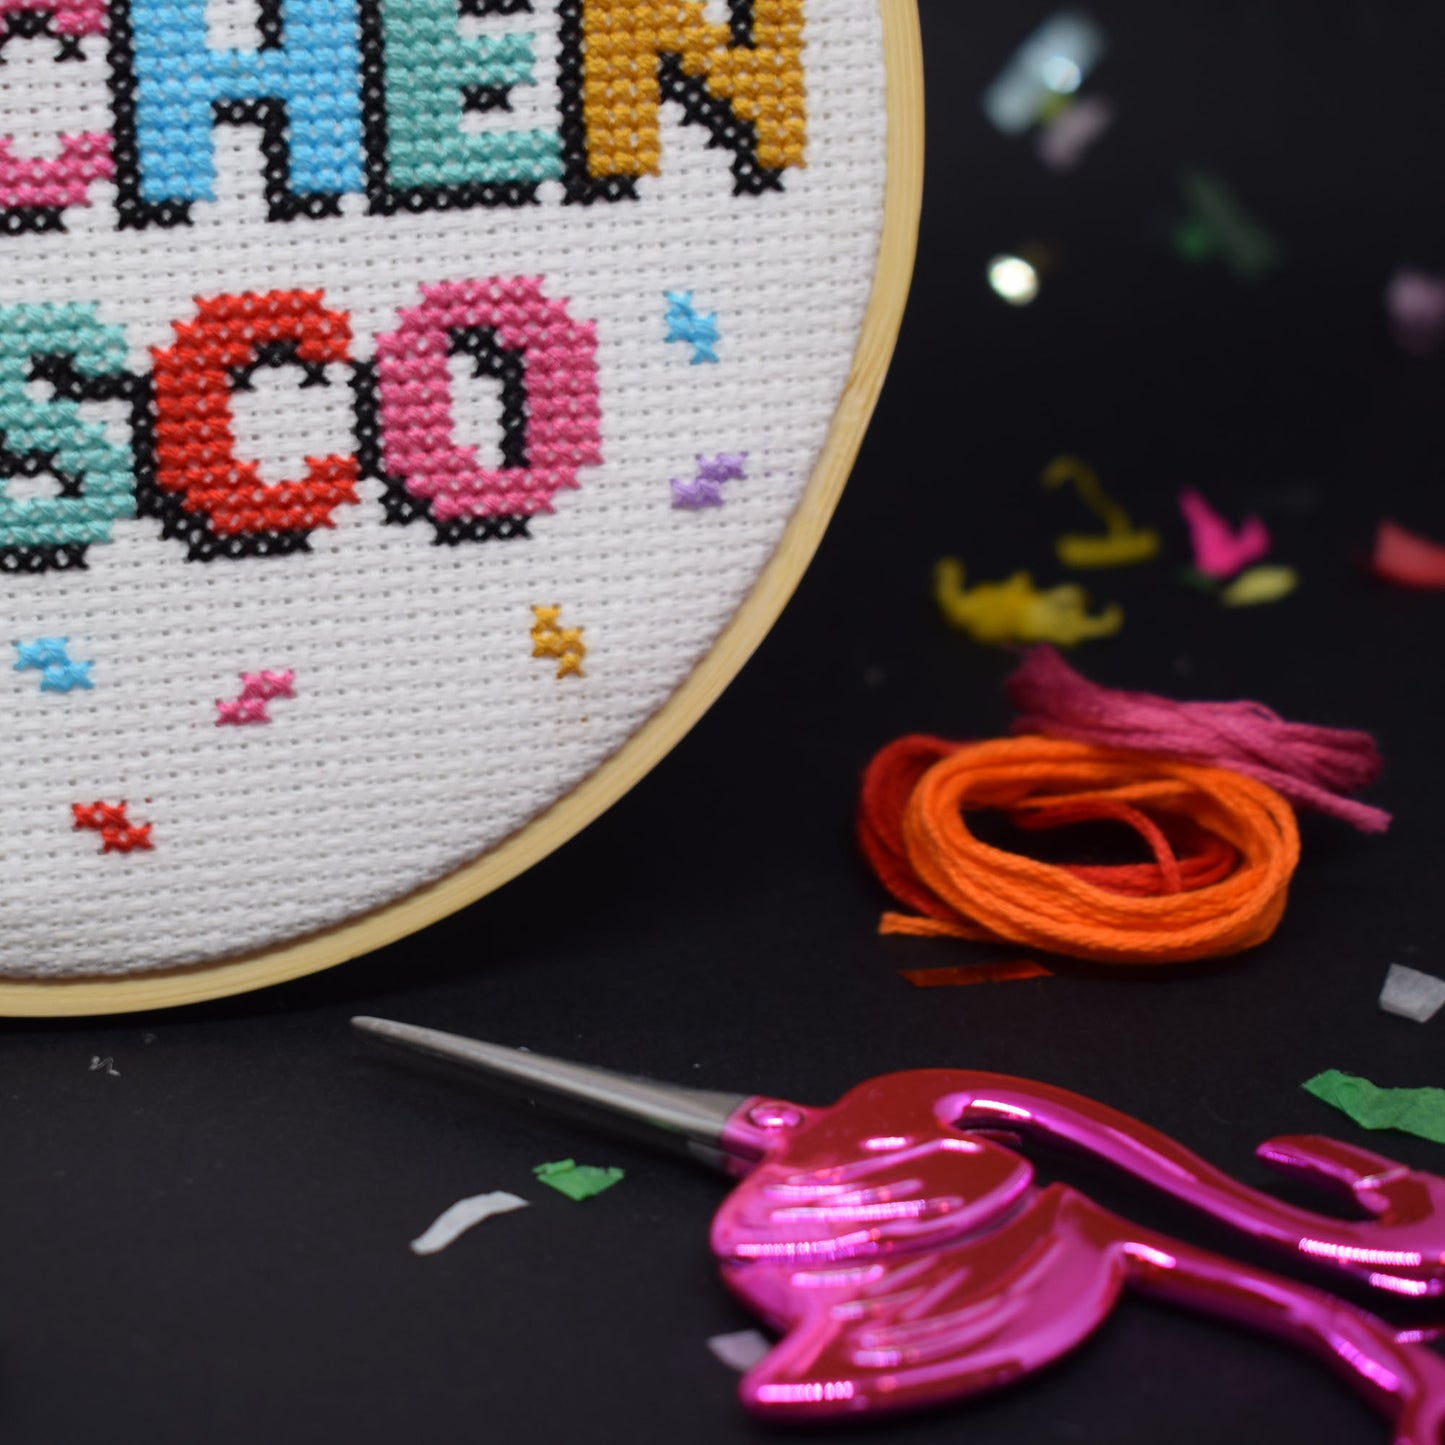 'The Kitchen Disco' Large Cross Stitch Kit